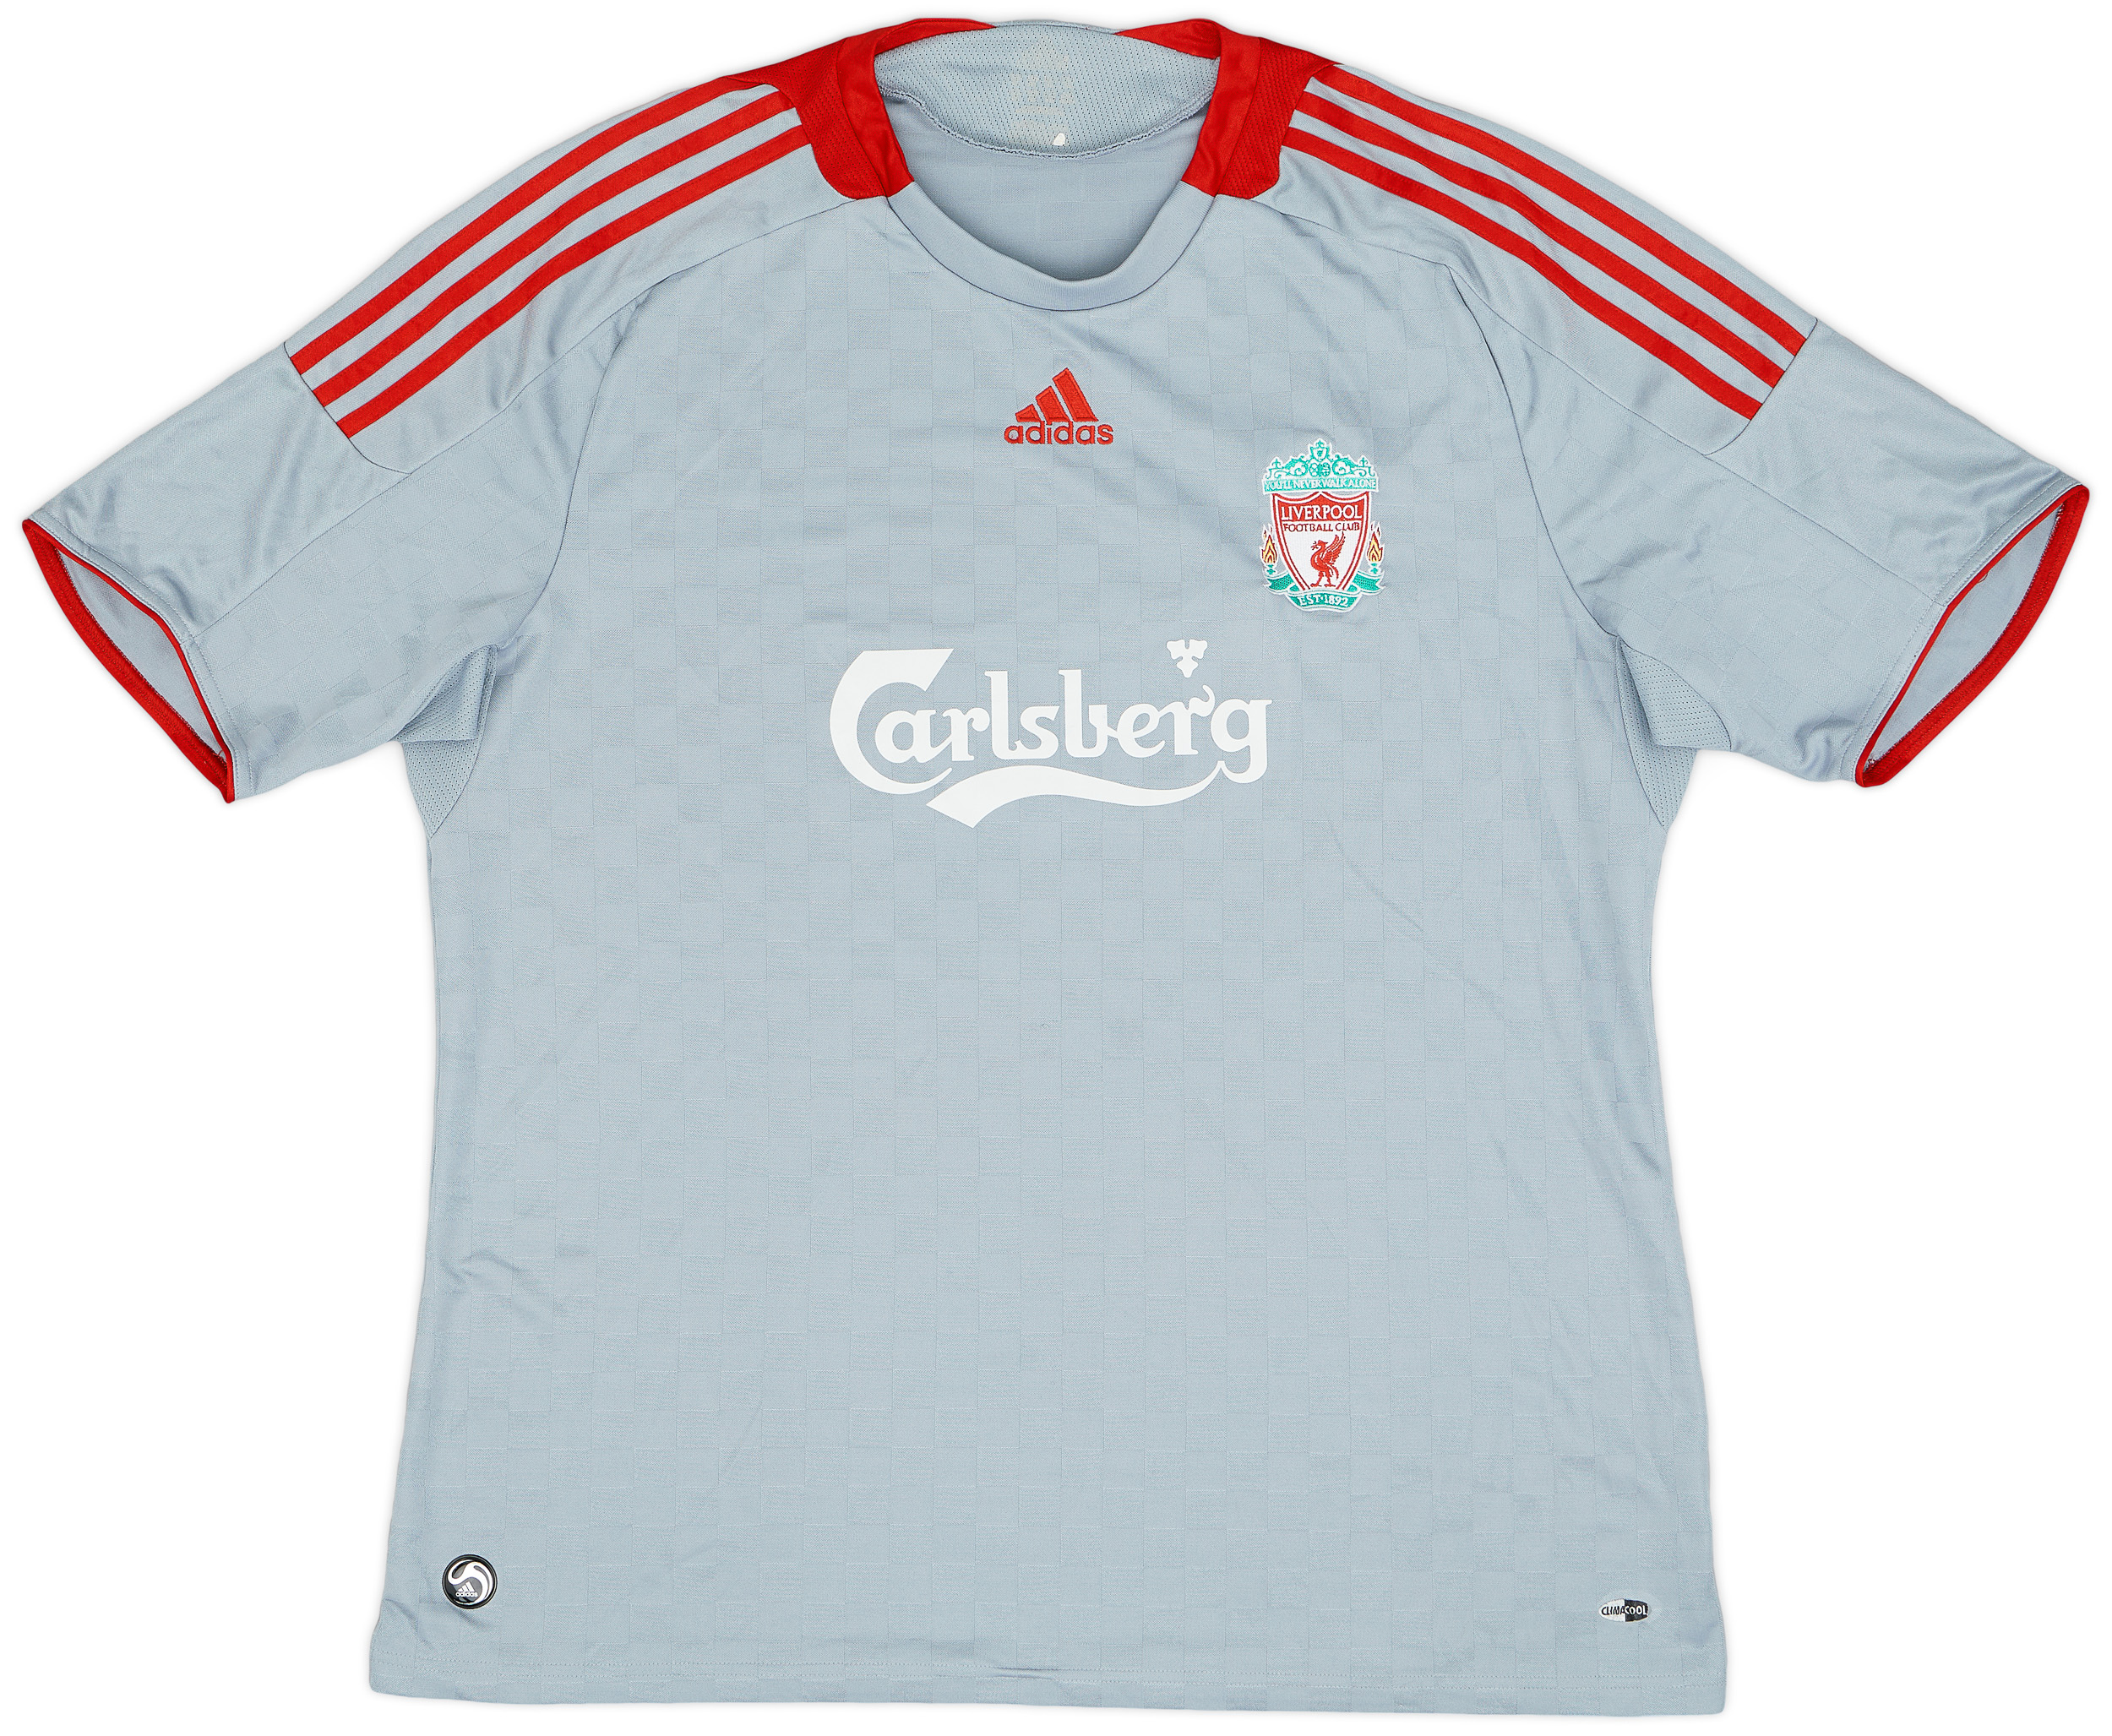 2008-09 Liverpool Away Shirt - 5/10 - ()